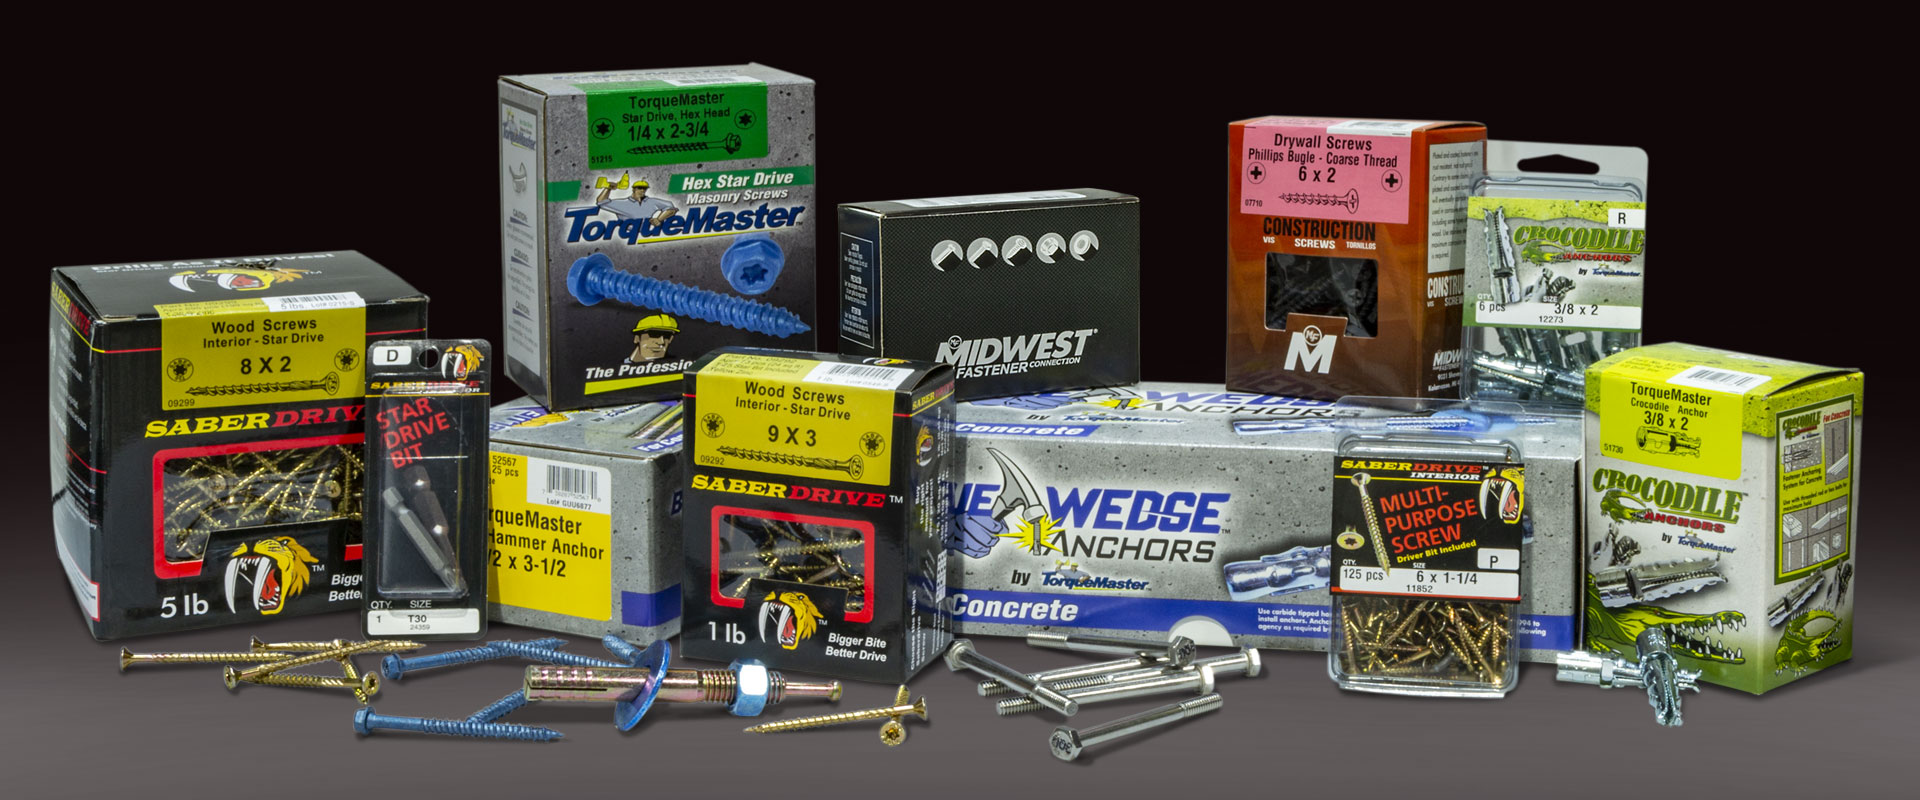 Piece-50 Midwest Fastener Corp Hard-to-Find Fastener 014973456054 Phillips All-Purpose Screws 6 x 1-1/4